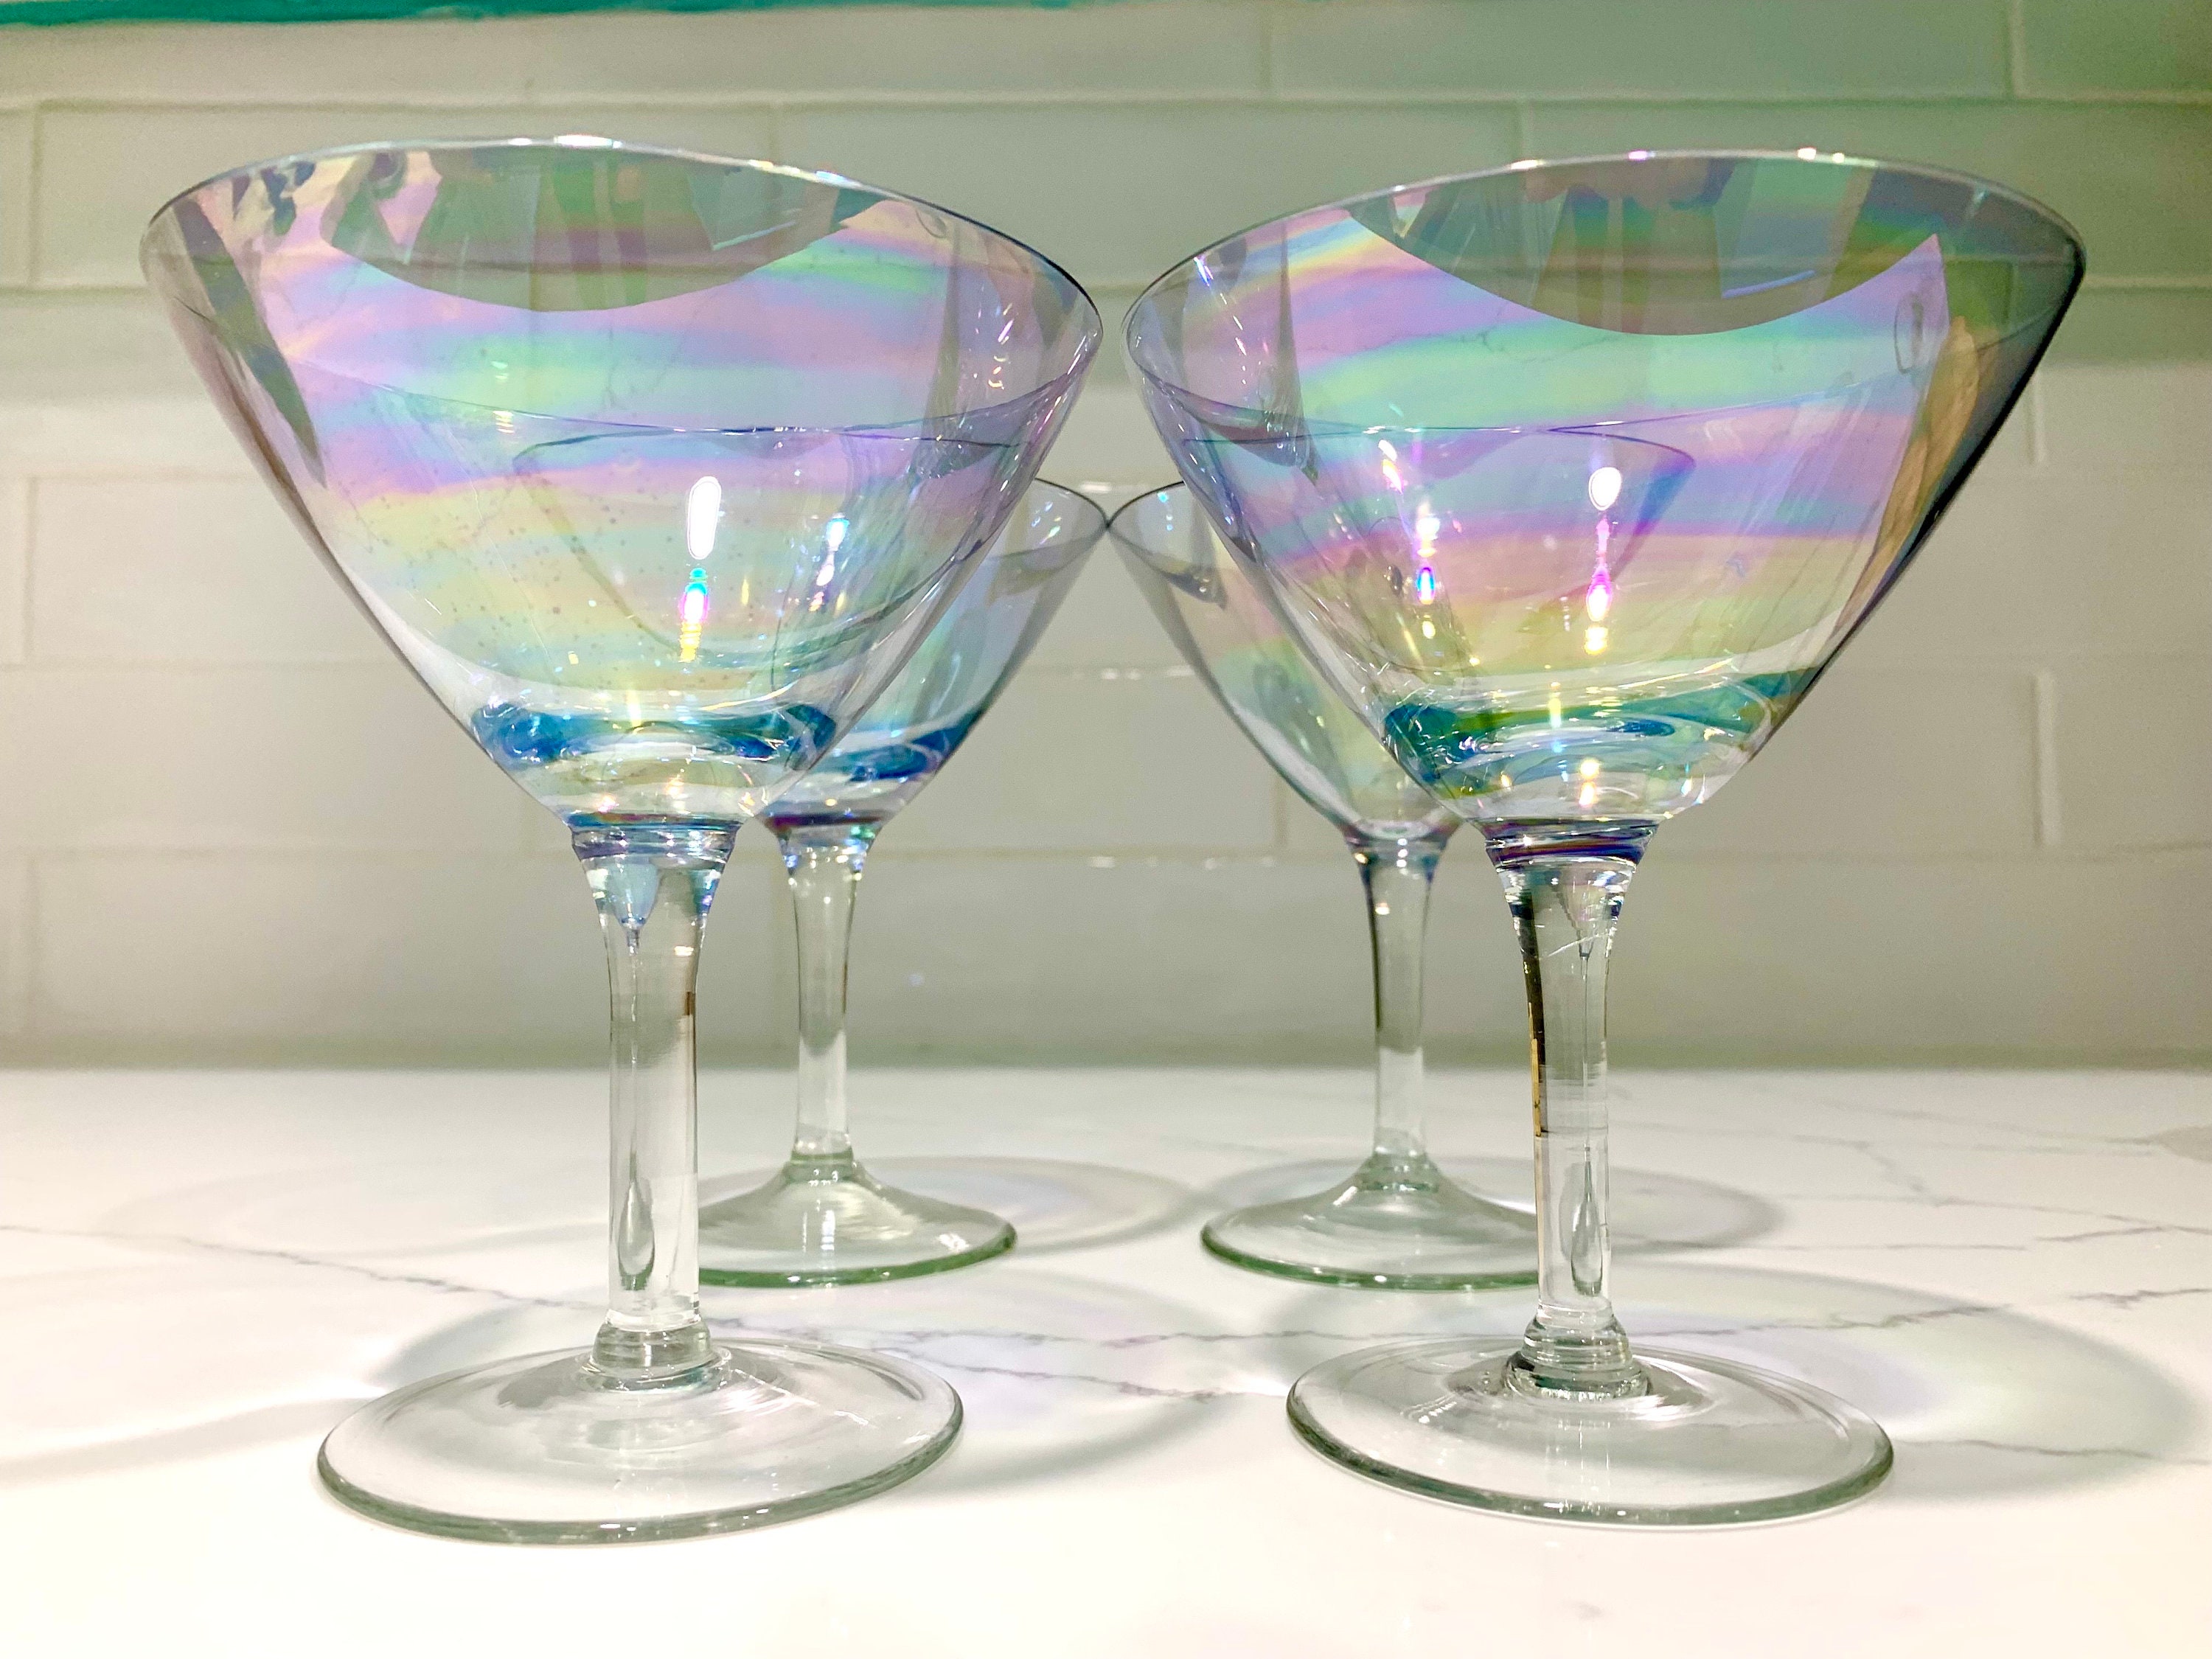 Grassi Iridescent Wine Glass set - 19 oz Pretty Cute Cool Rainbow